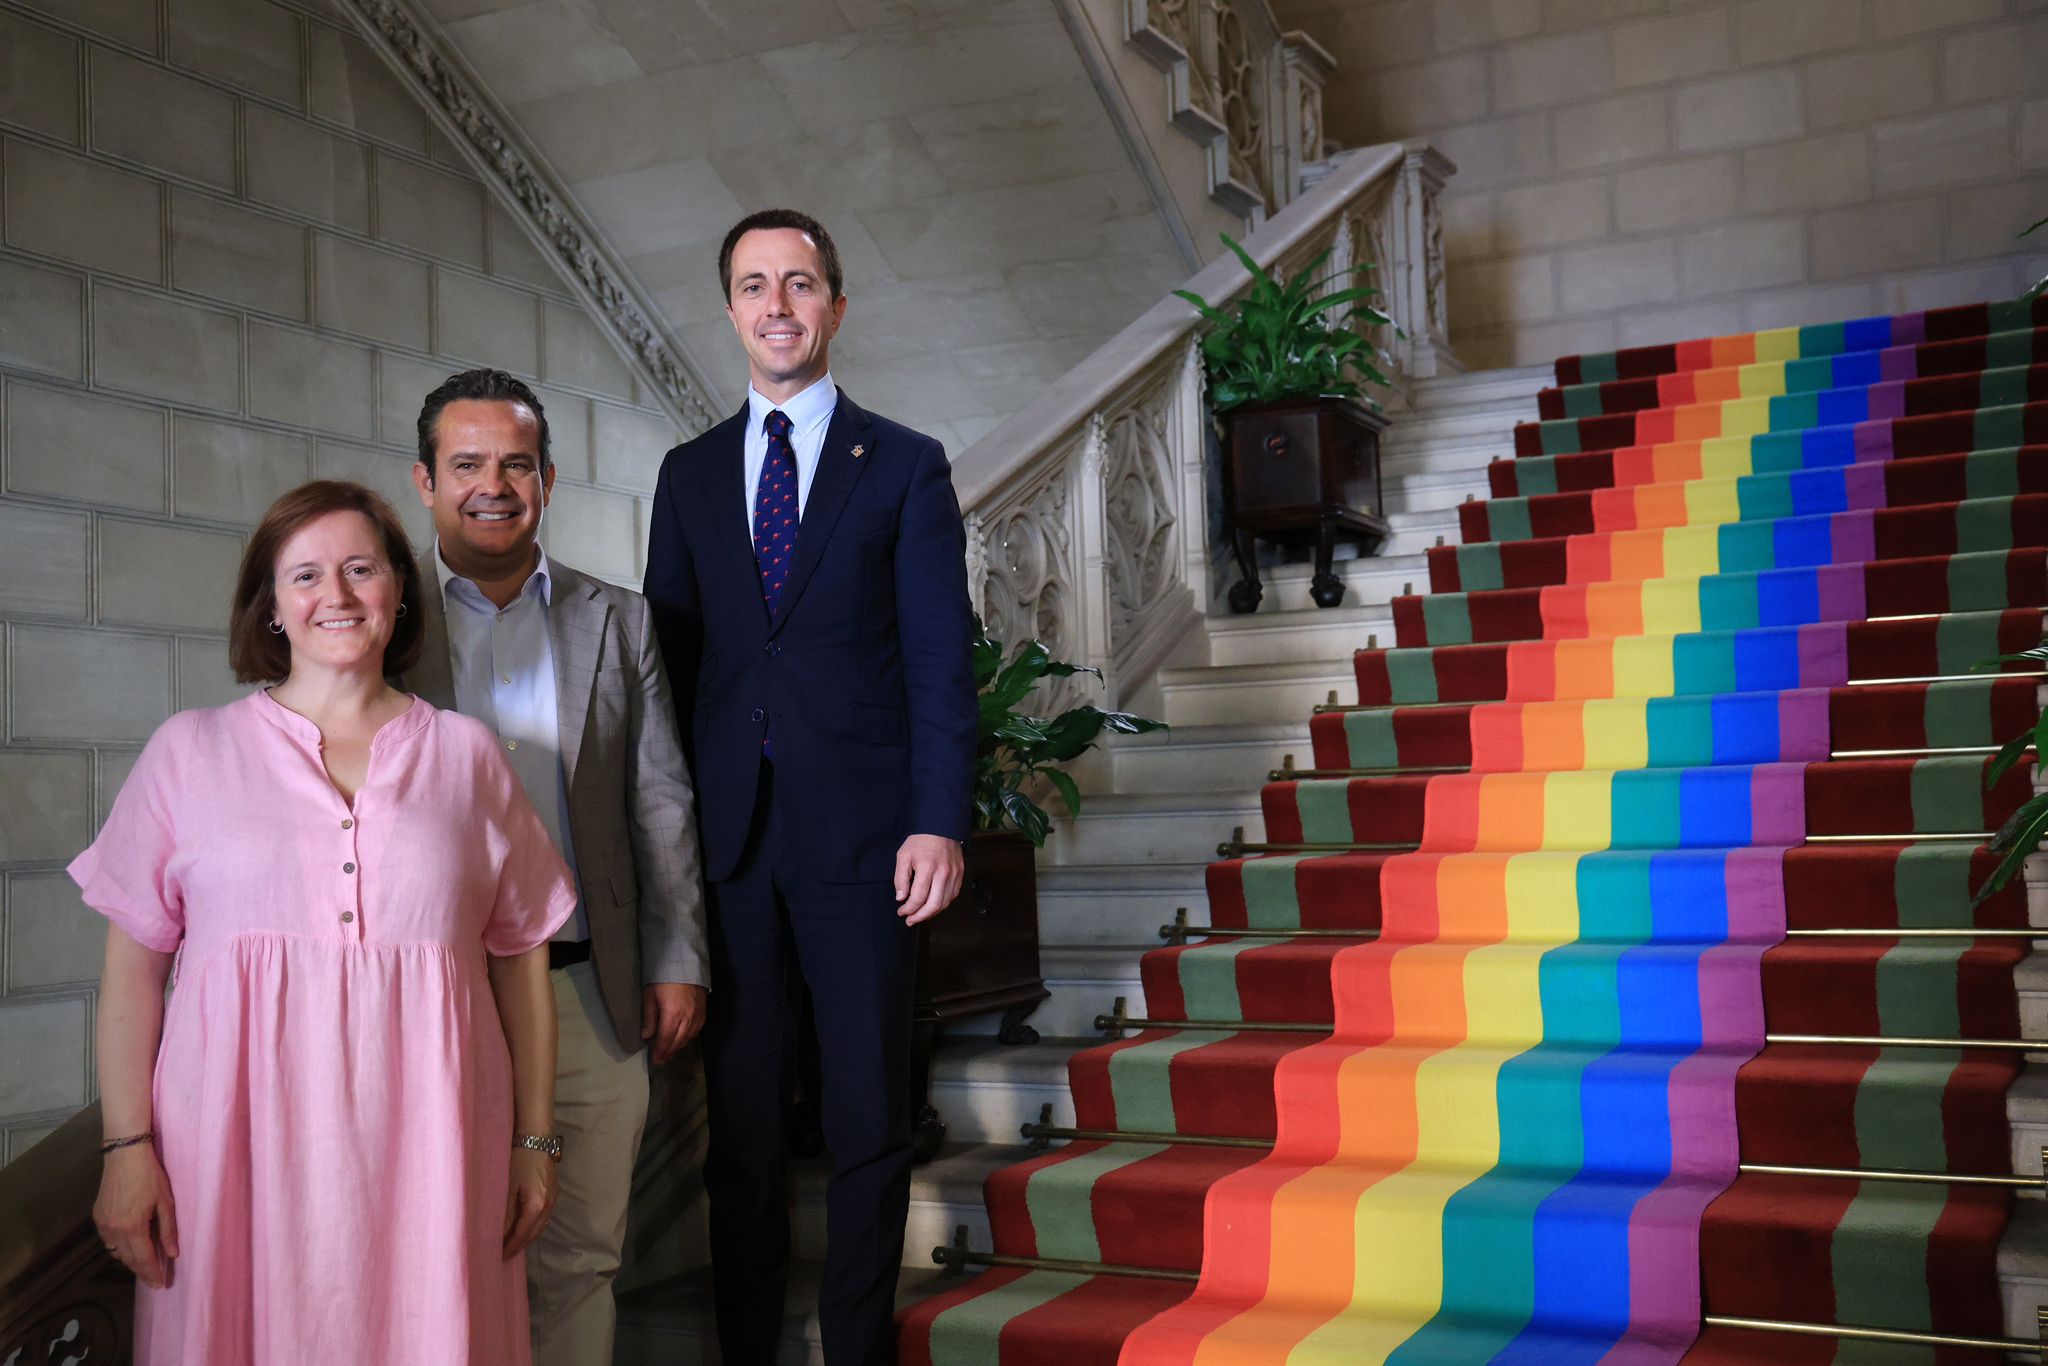 El presidente Llorenç Galmés, el consejero Toni Fuster y la directora insular Ana Ferriol en la escalera de honor engalanada del Palau del Consell.